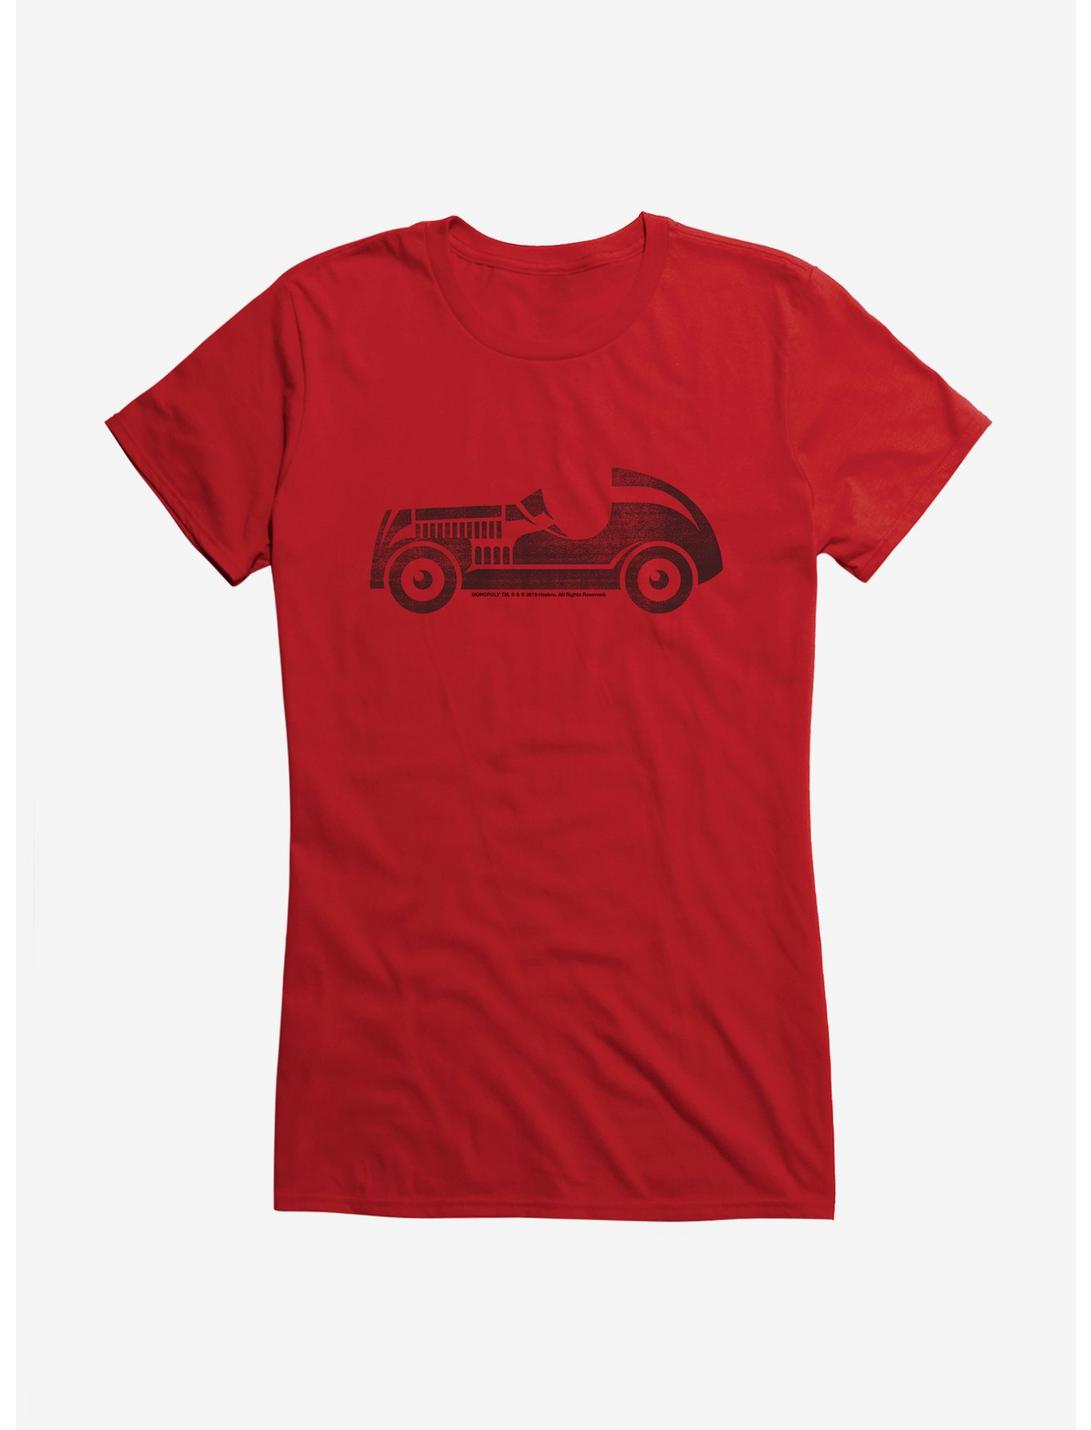 Monopoly Racecar Icon Girls T-Shirt, , hi-res